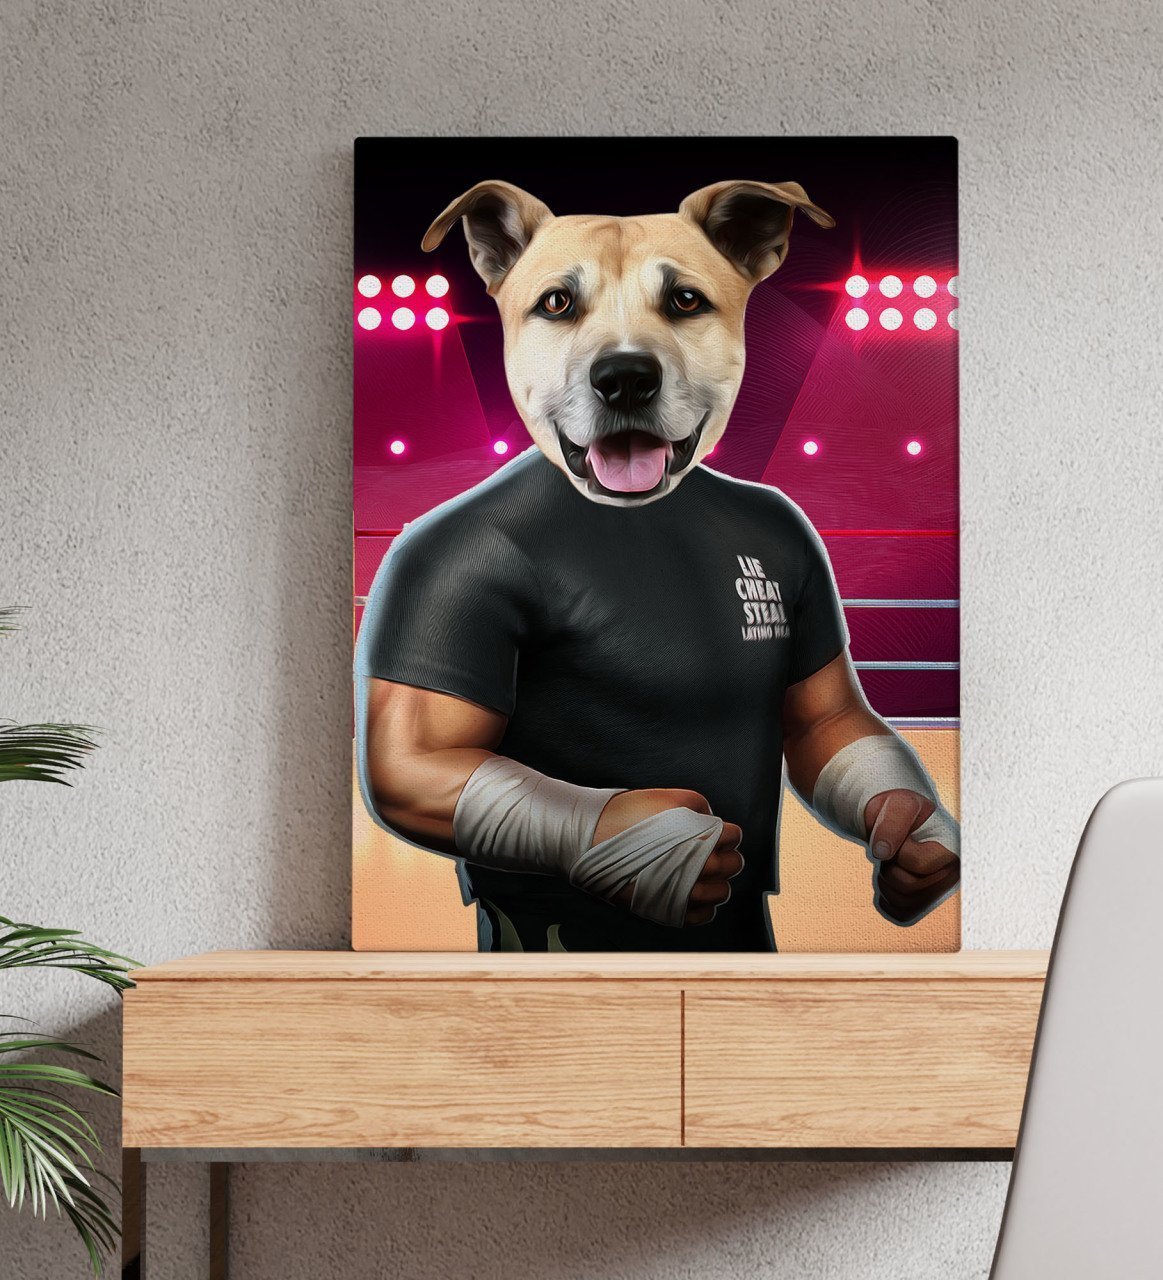 Evcil Dostlara Özel Wrestle Tasarımlı Portre Kanvas Tablo 50x70cm-2